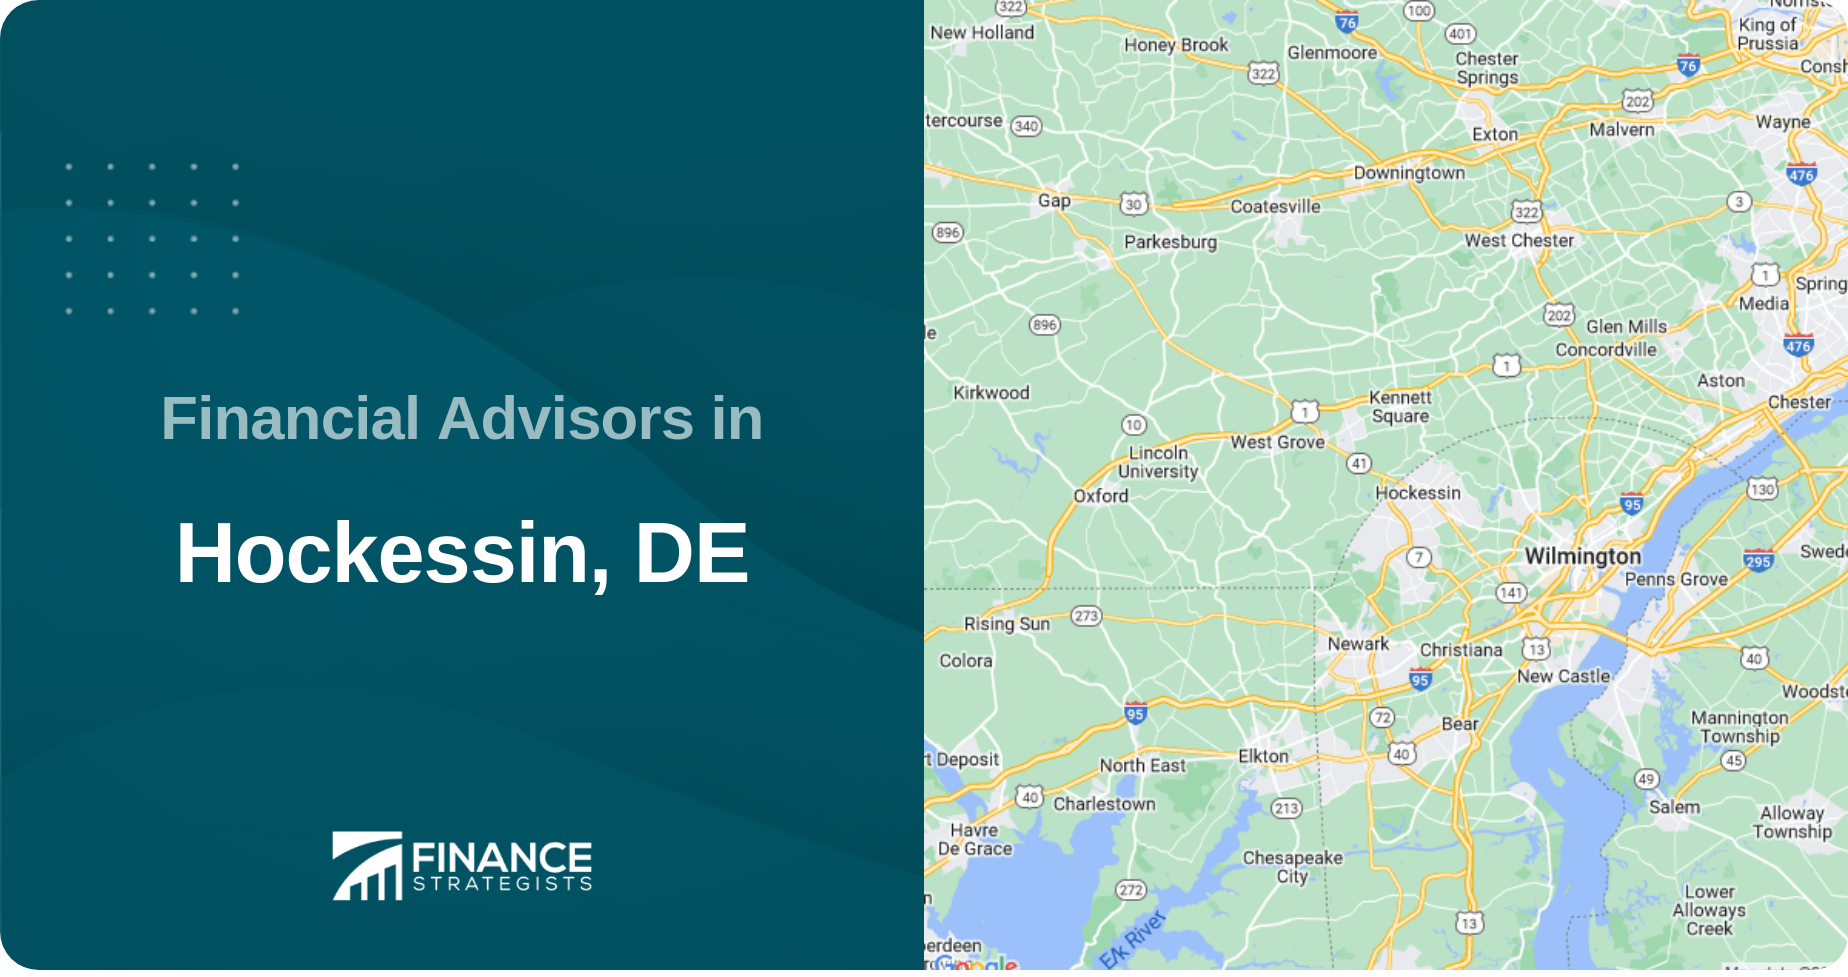 Financial Advisors in Hockessin, DE